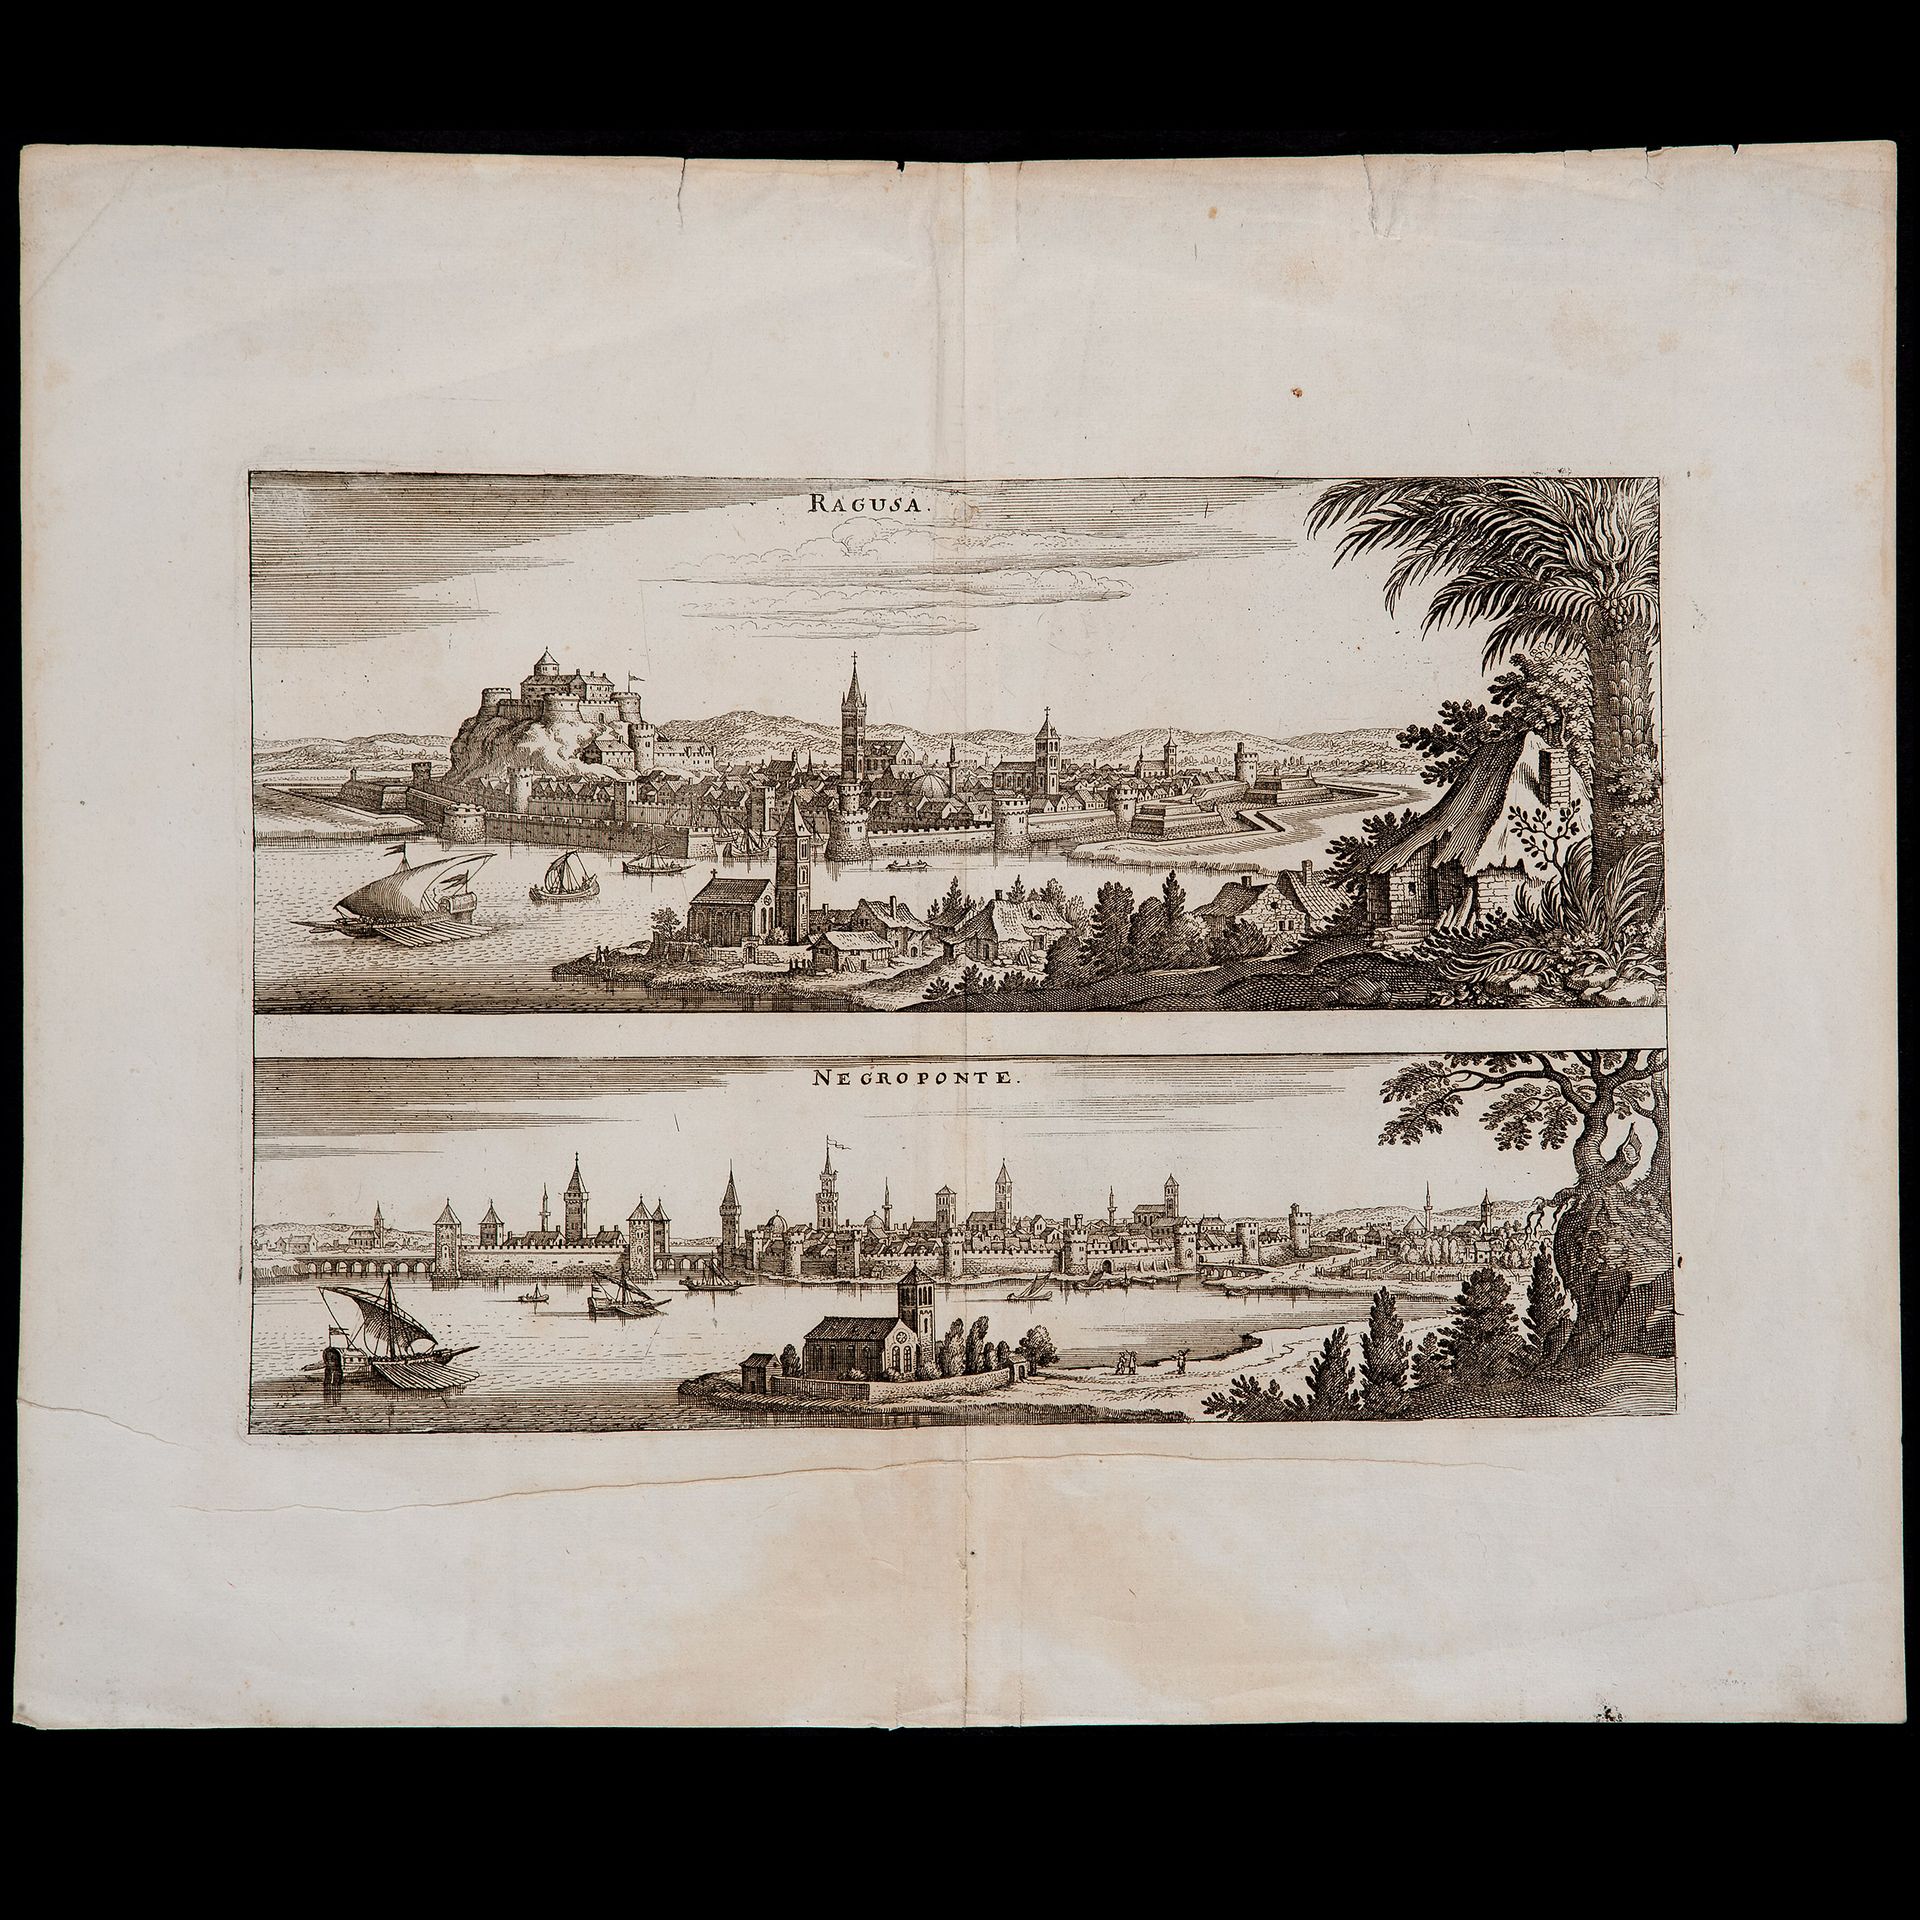 Matthäus Merian (Basel 1593 – Bad Schwalbach 1650), 'Ragusa e Negroponte', Germa&hellip;